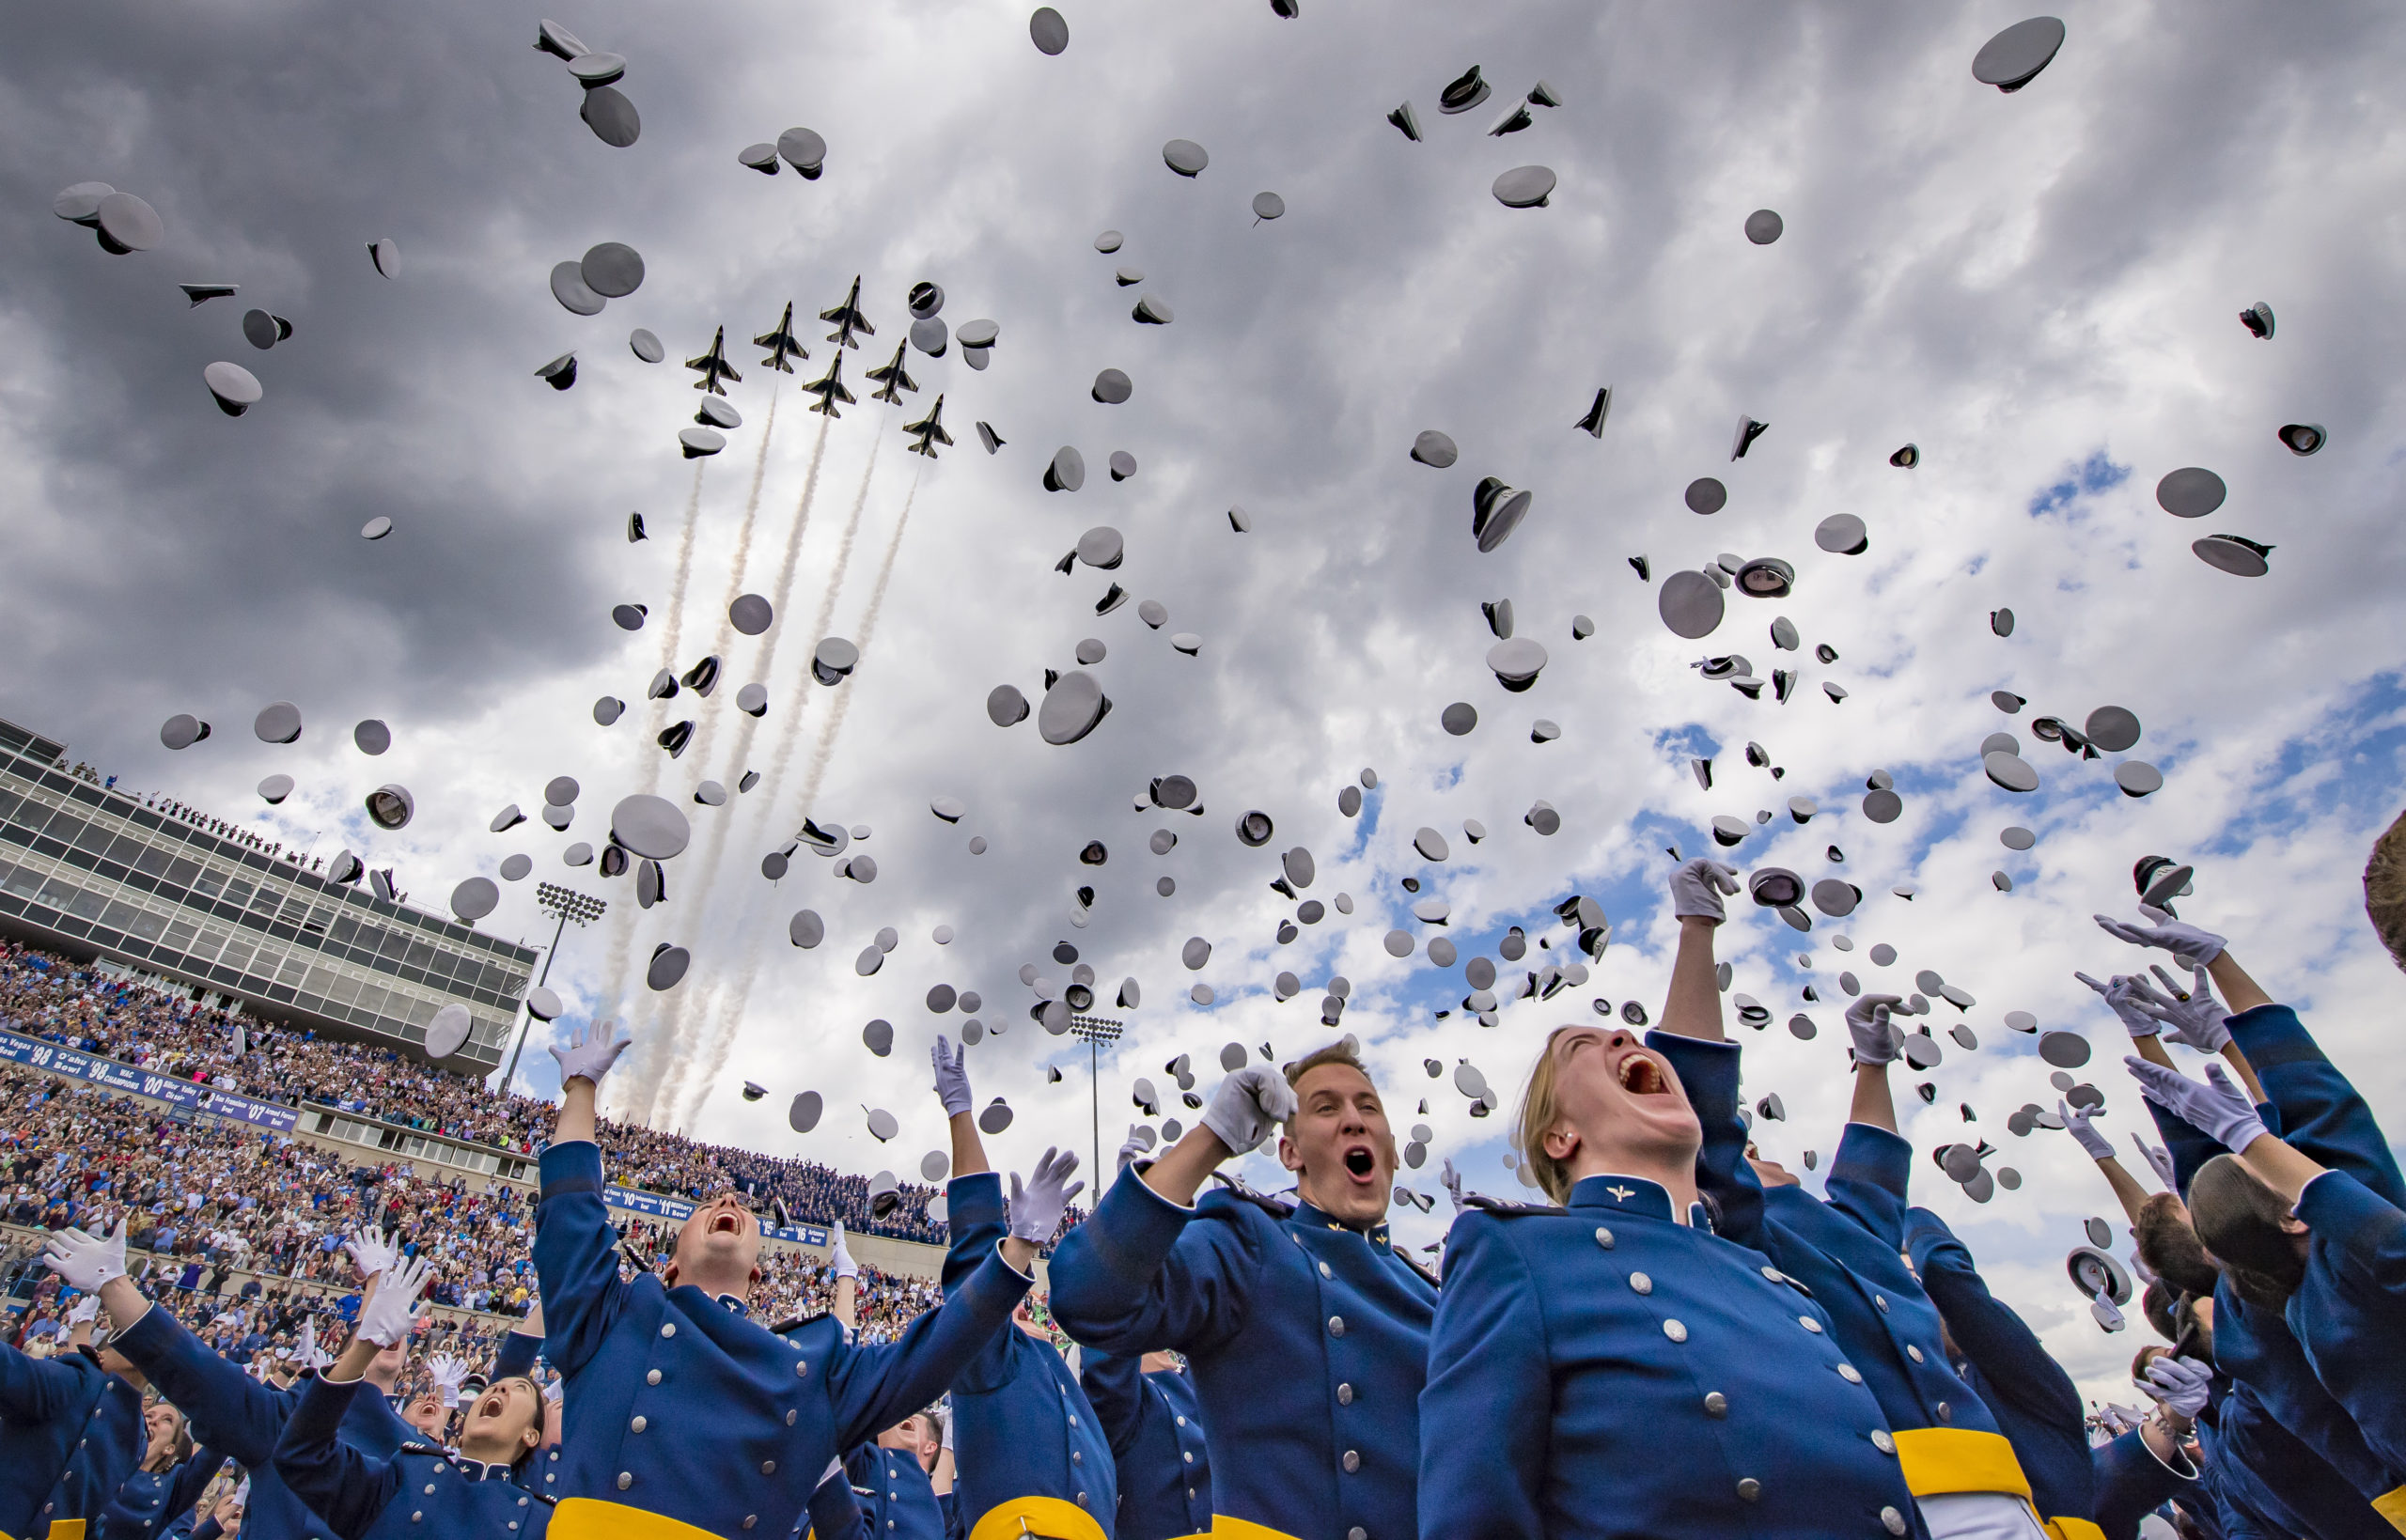 USAF Thunderbirds perform flyover at Air Force Academy graduation